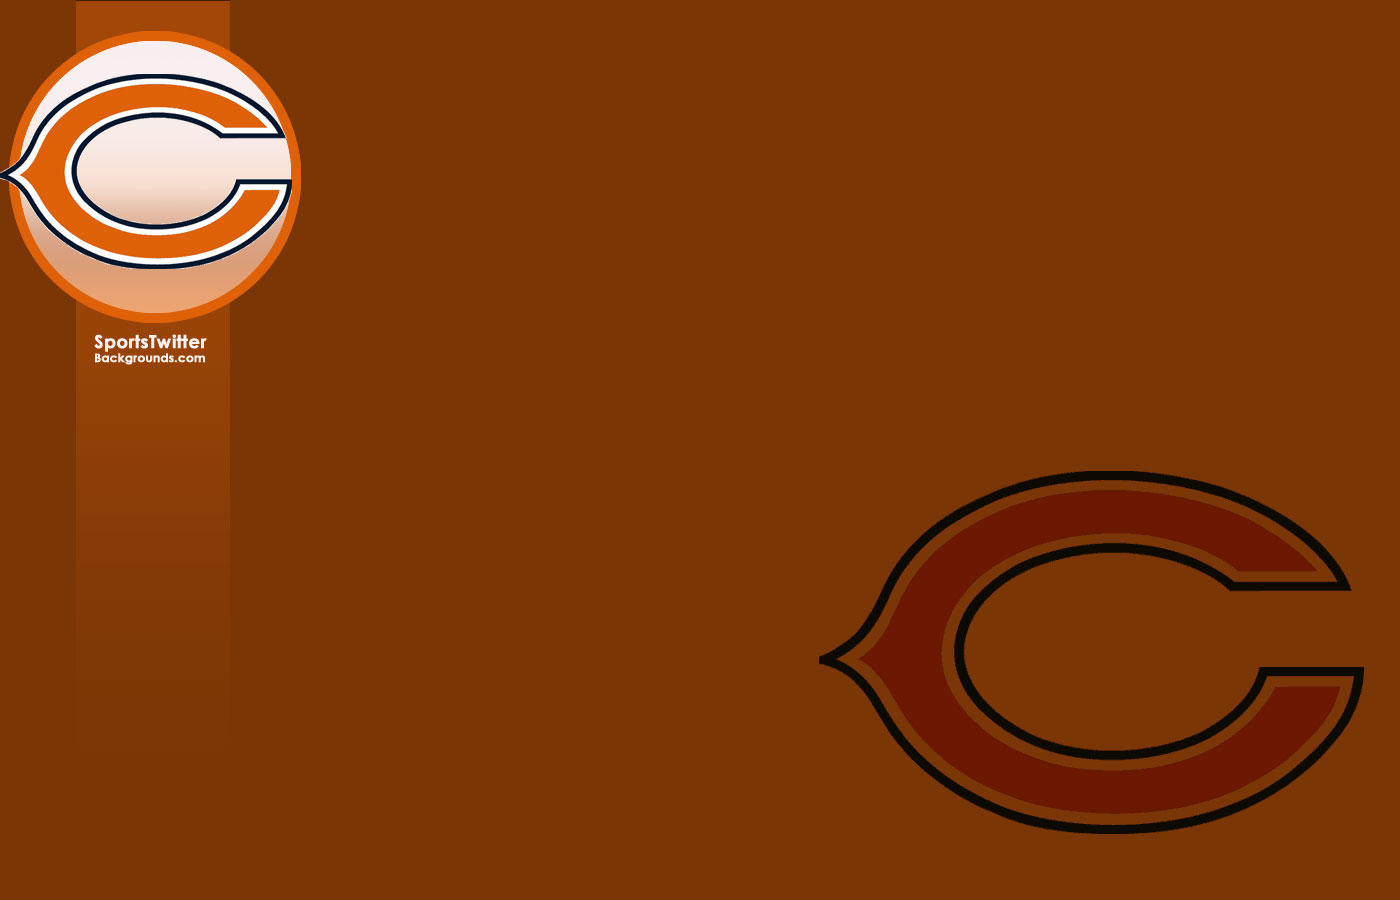 Chicago Bears Wallpaper Desktop Image